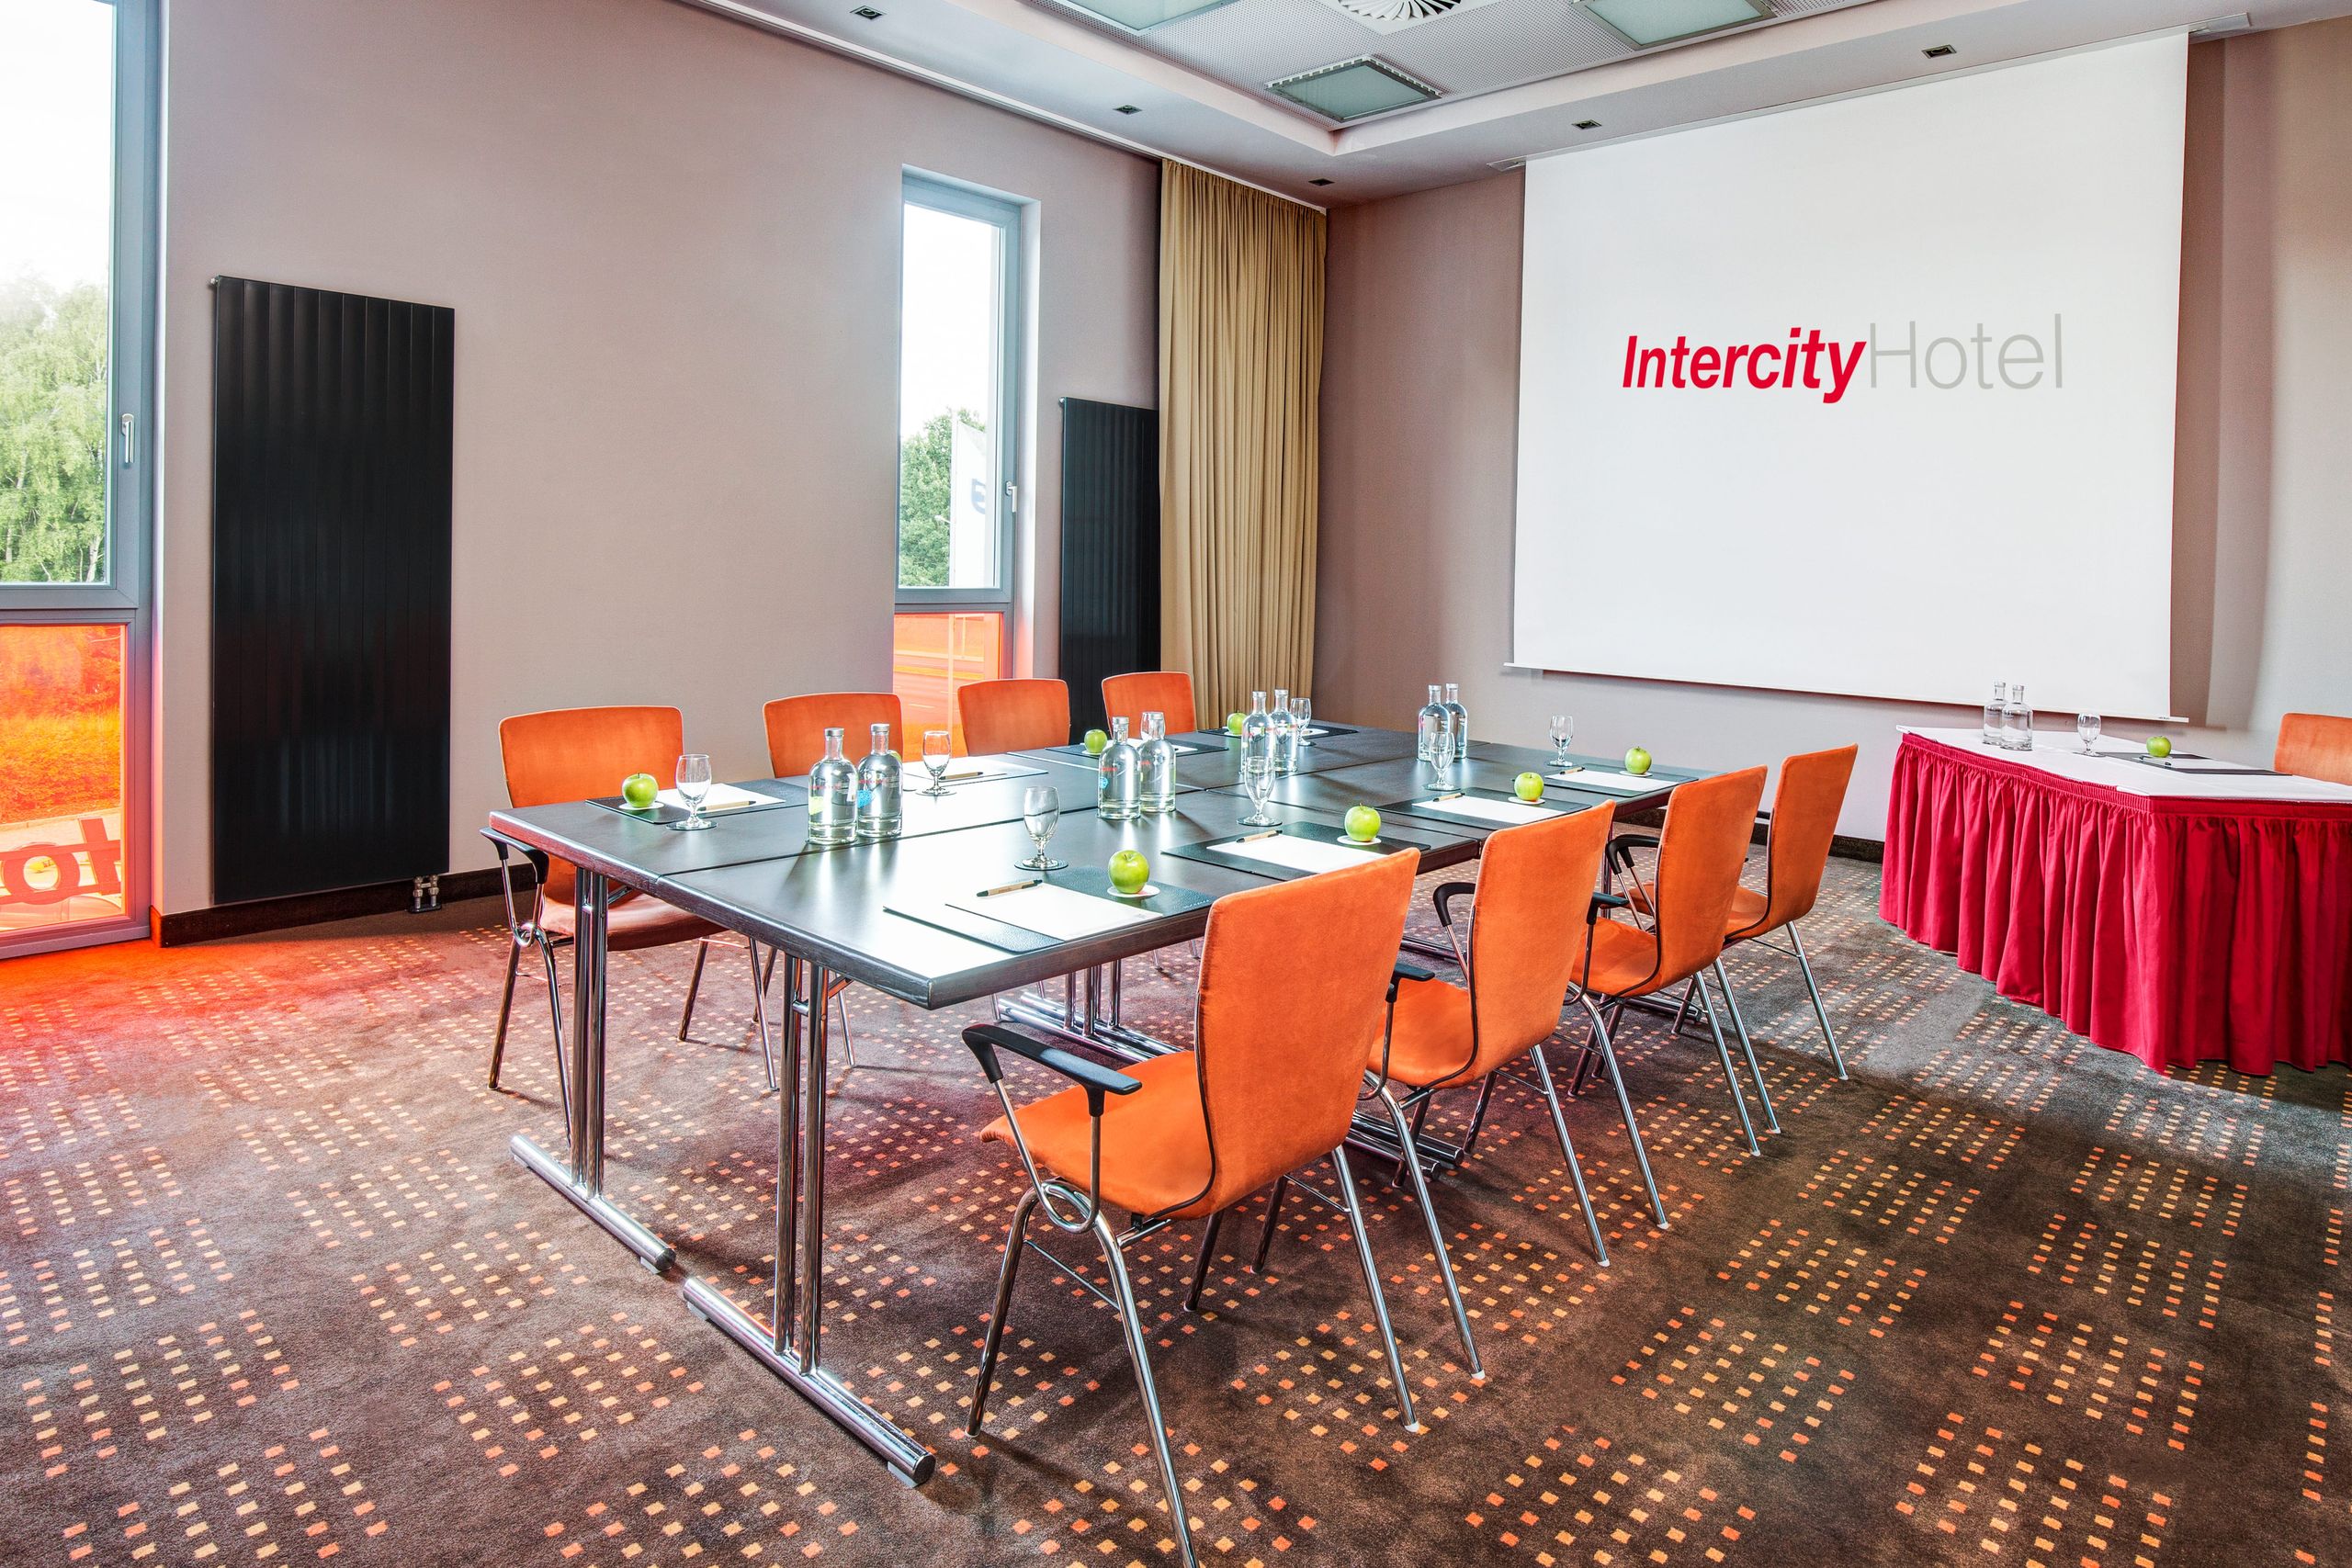 IntercityHotel Berlin-Brandenburg Airport - Meetings & Events - Konferenzräume